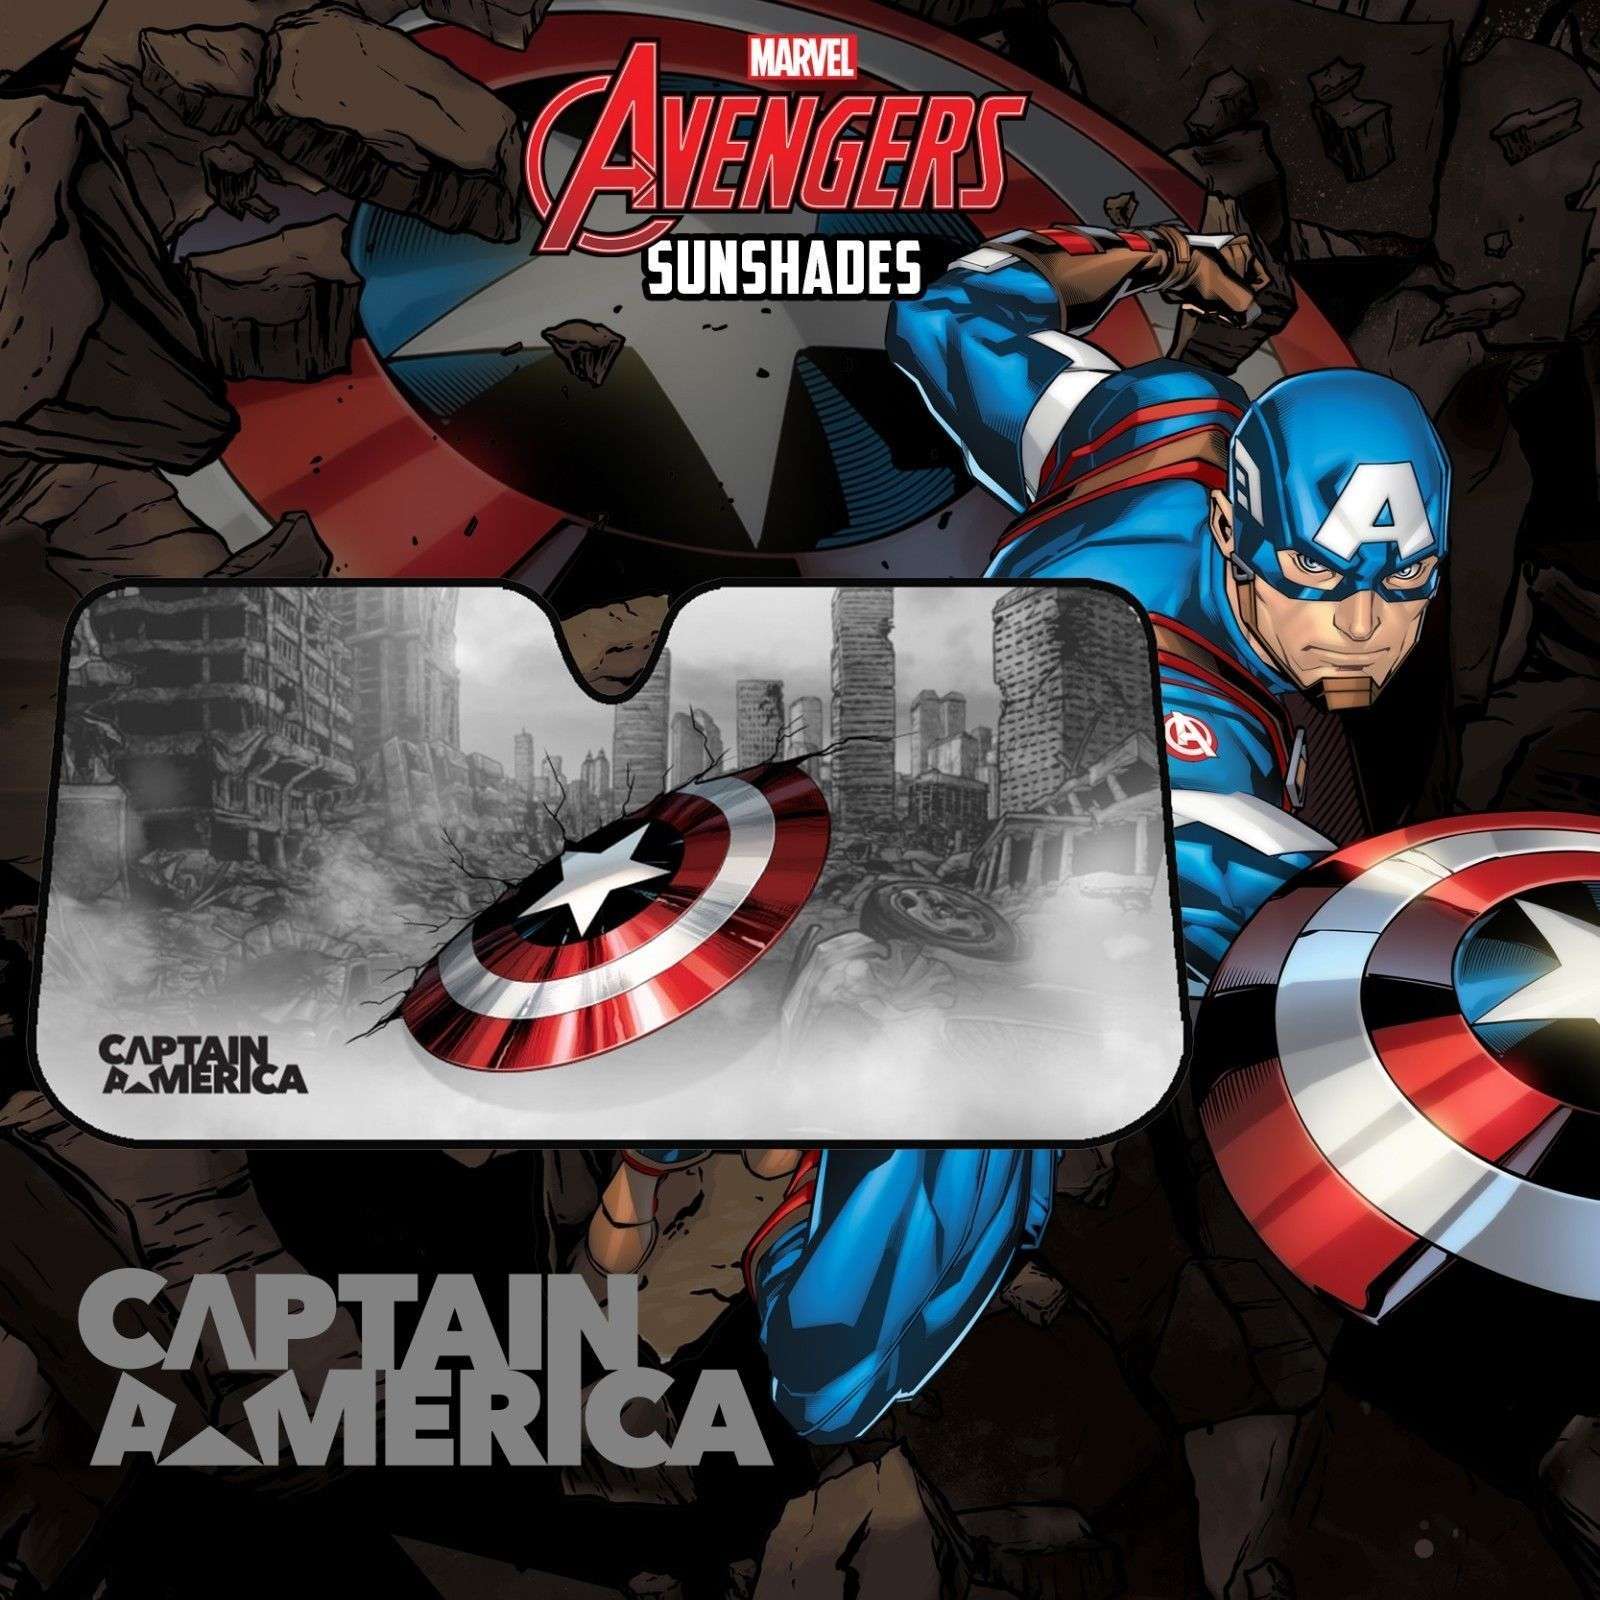 Marvel Avengers Sun Shade [150cm x 70cm] - CAPTAIN AMERICA Deals499